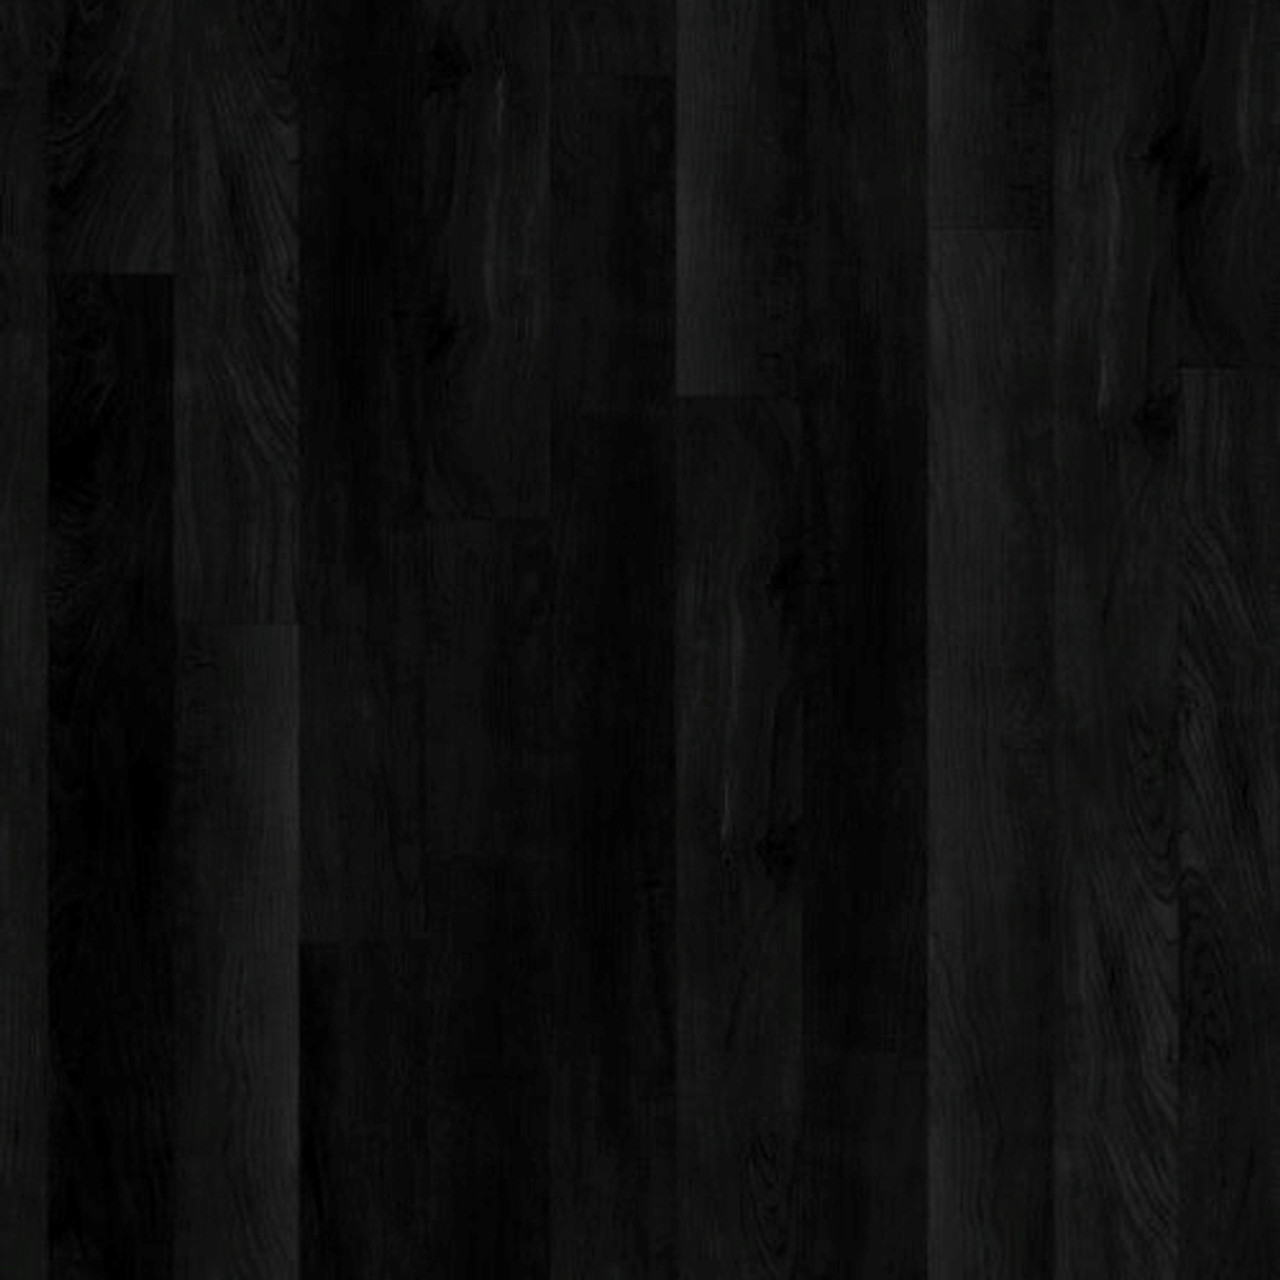 Dark Shadows Luxury Vinyl Plank Flooring - Dark Color